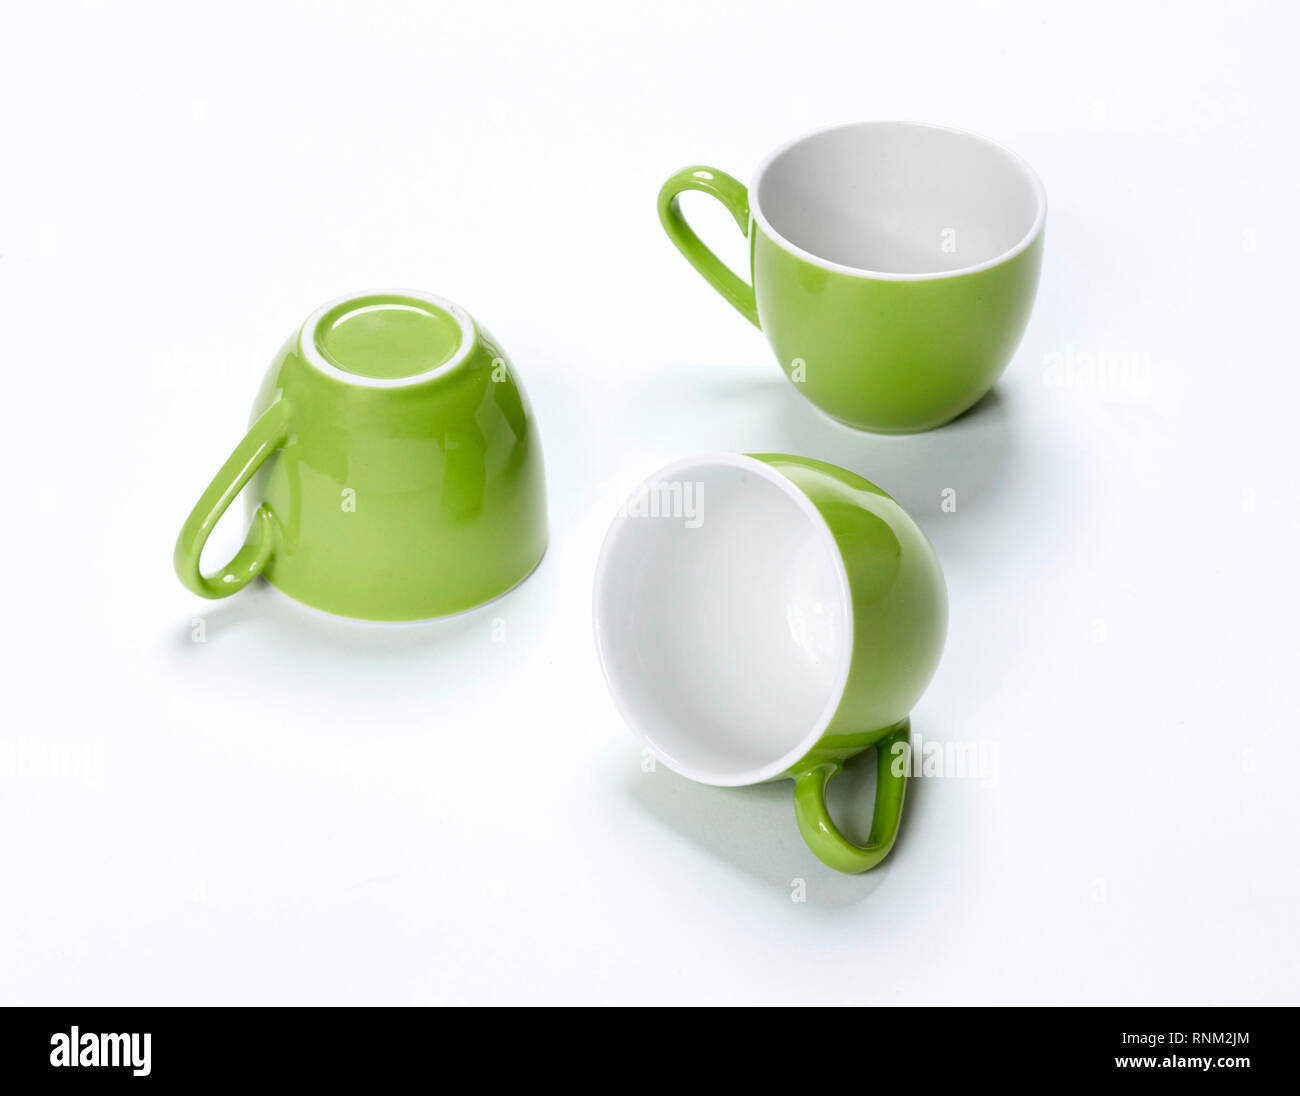 Three green espresso cups. Studio picture against a white background Stock Photo